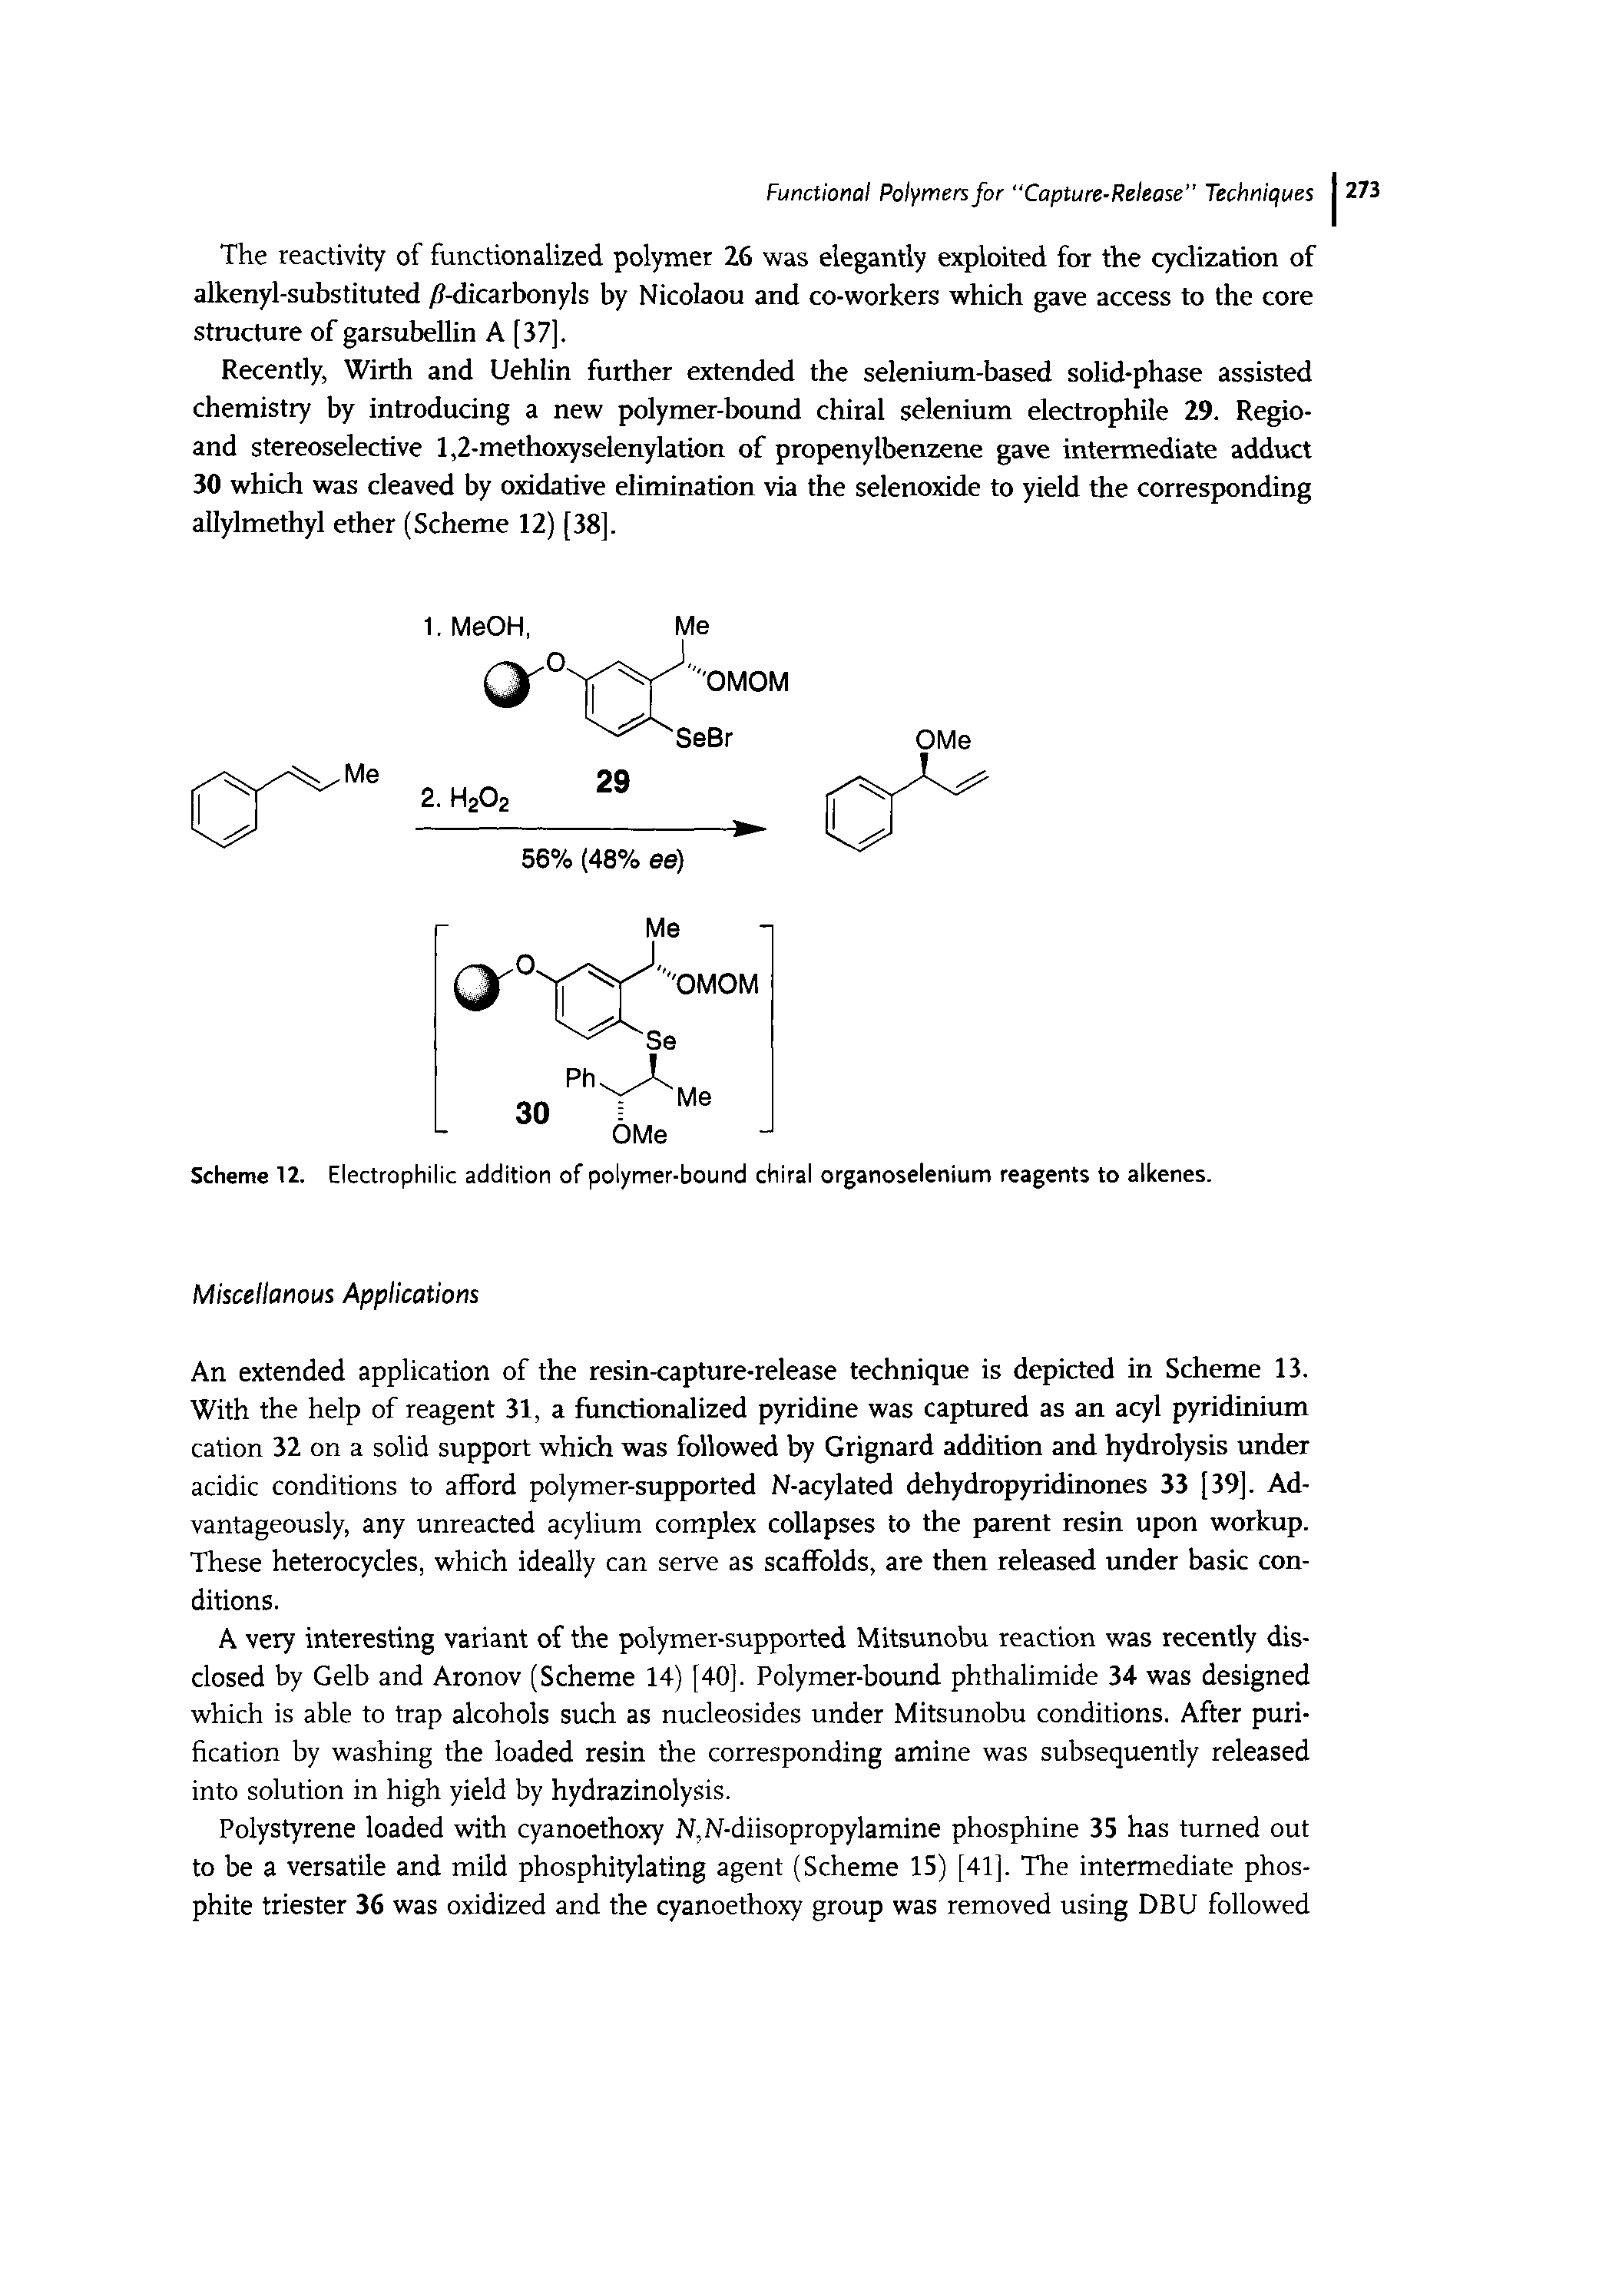 Scheme 12. Electrophilic addition of polymer-bound chiral organoselenium reagents to alkenes.